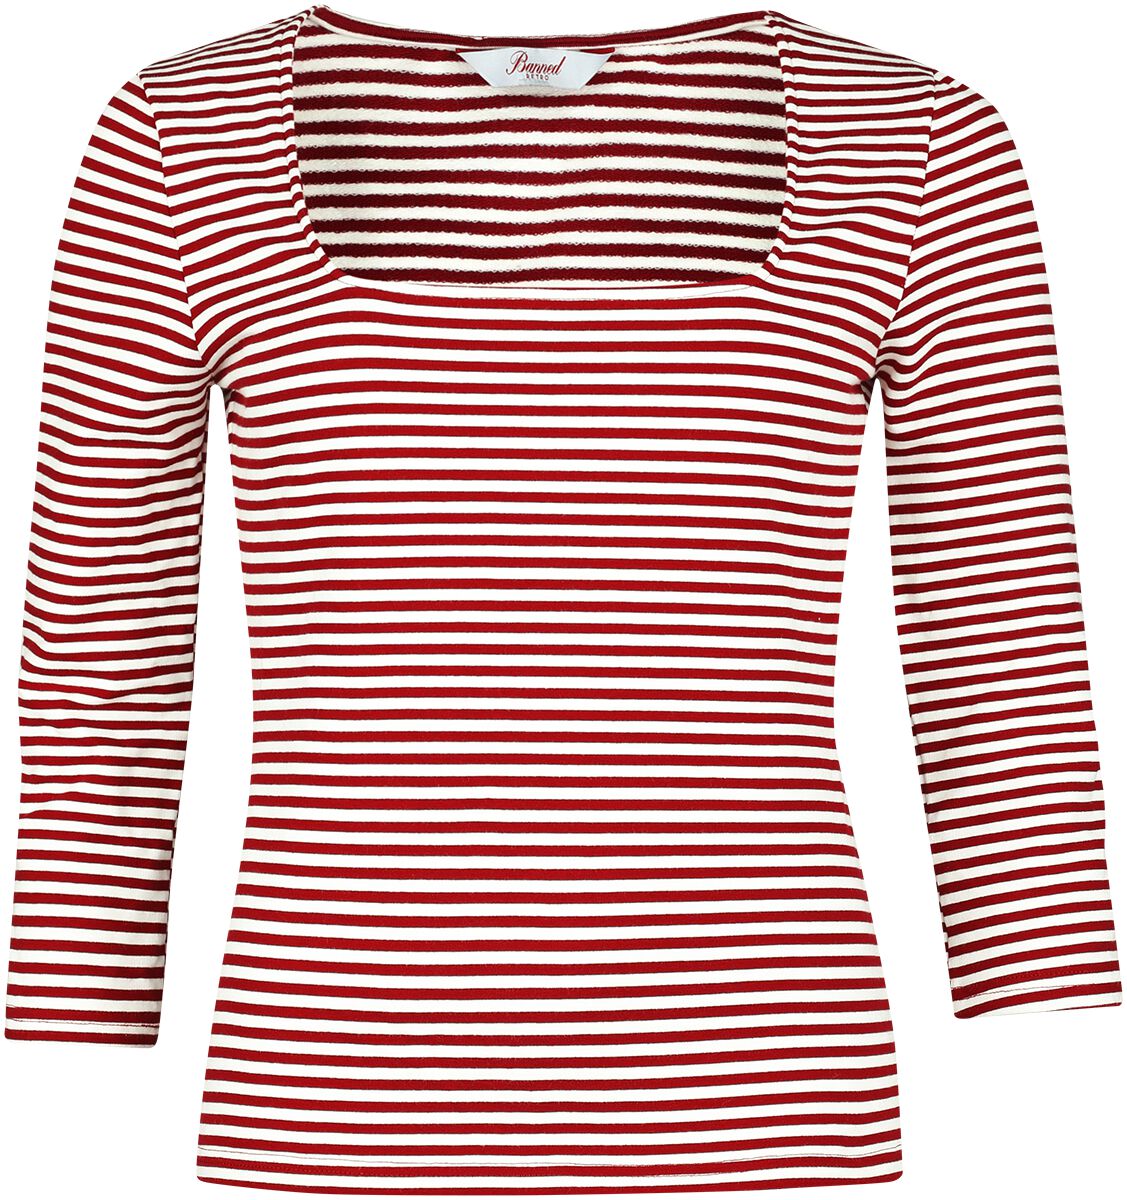 Banned Retro Stripe & Square Top Langarmshirt rot weiß in XL